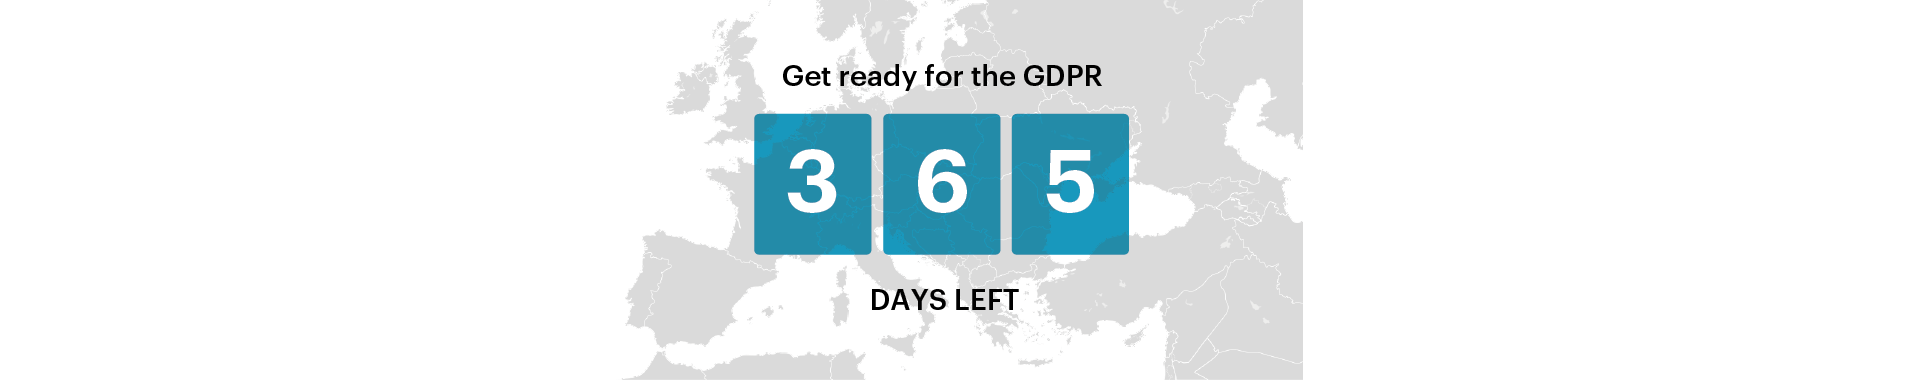 GDPR countdown: Encrypt now to get ready